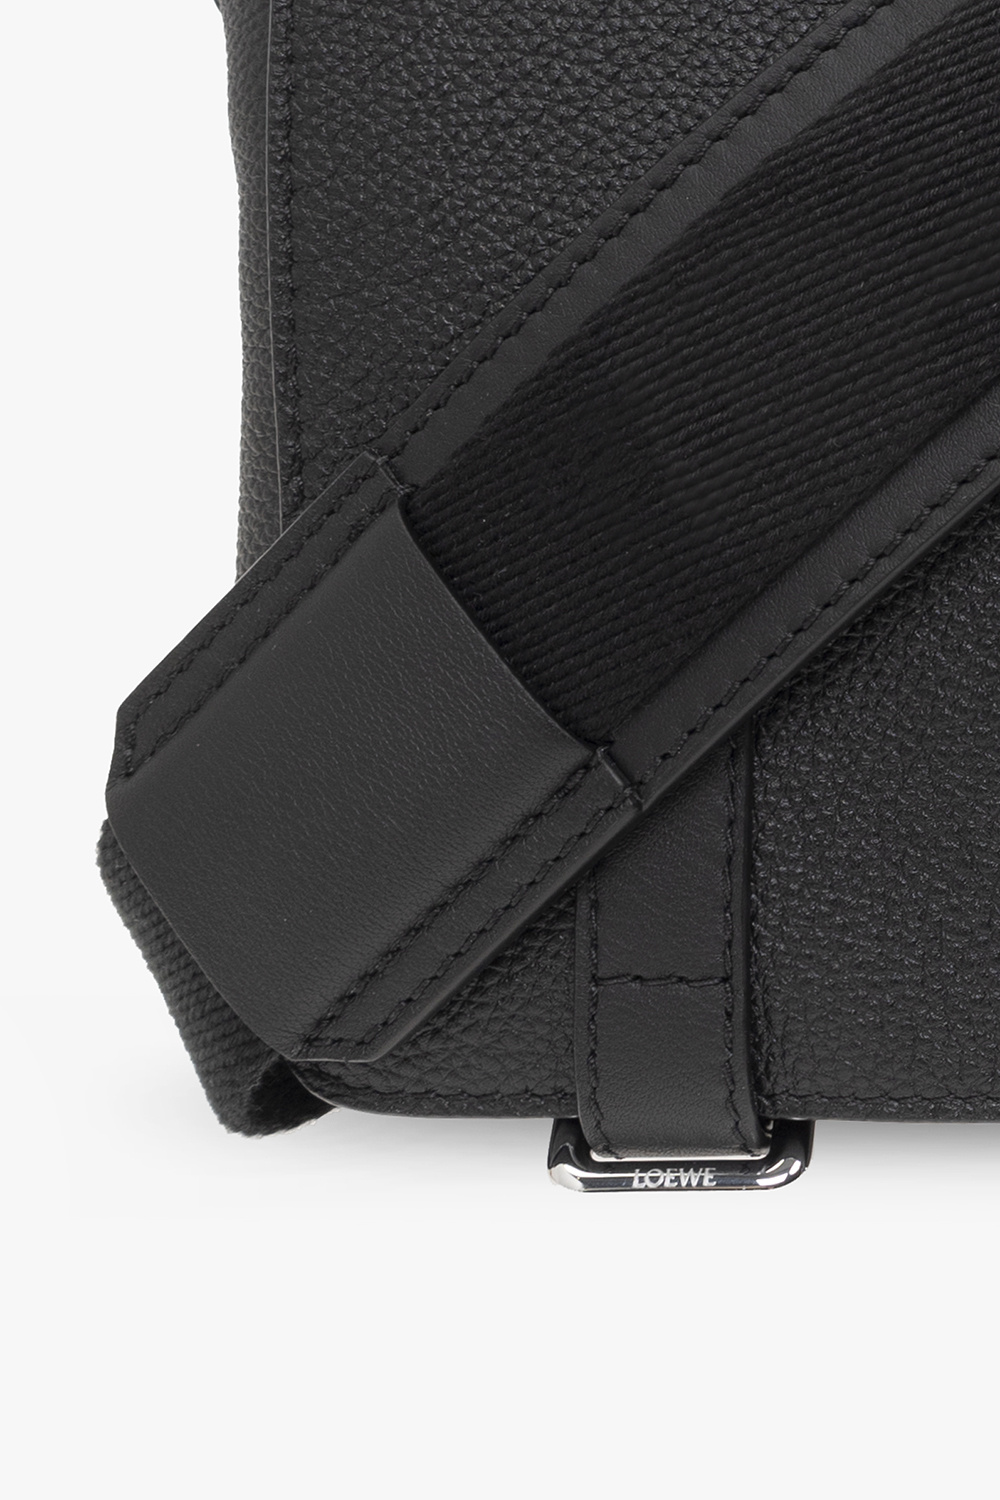 Loewe ‘Military Messenger XS’ shoulder bag